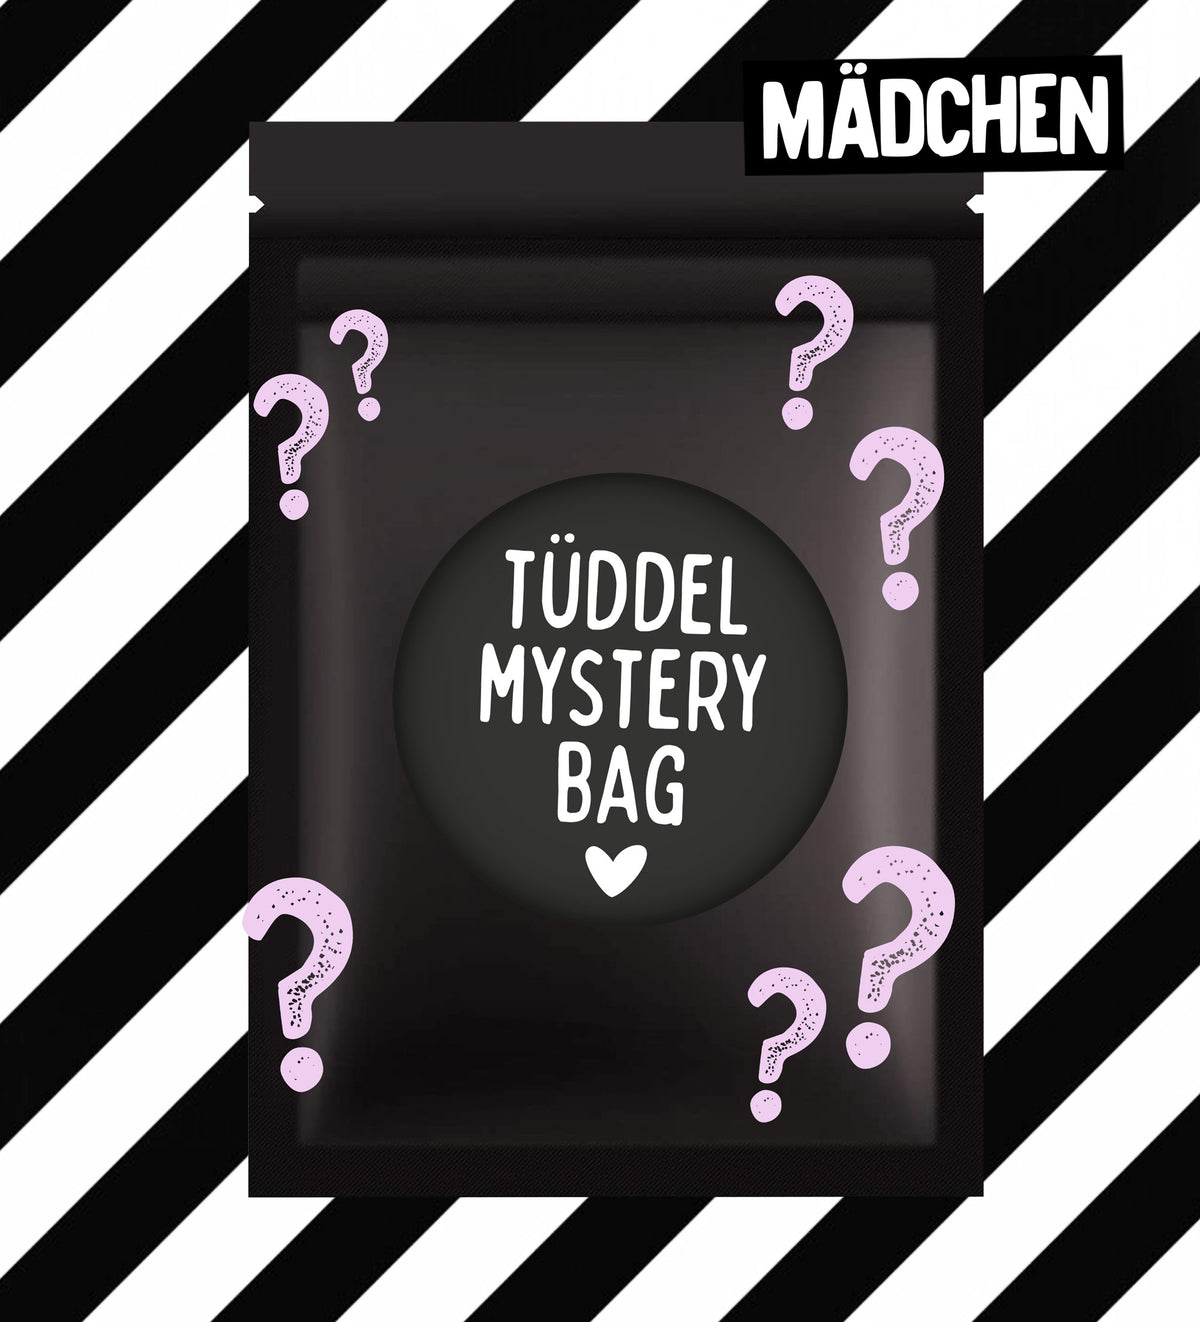 Tüddel Mystery Bag - Mädchen *NOVEMBER*